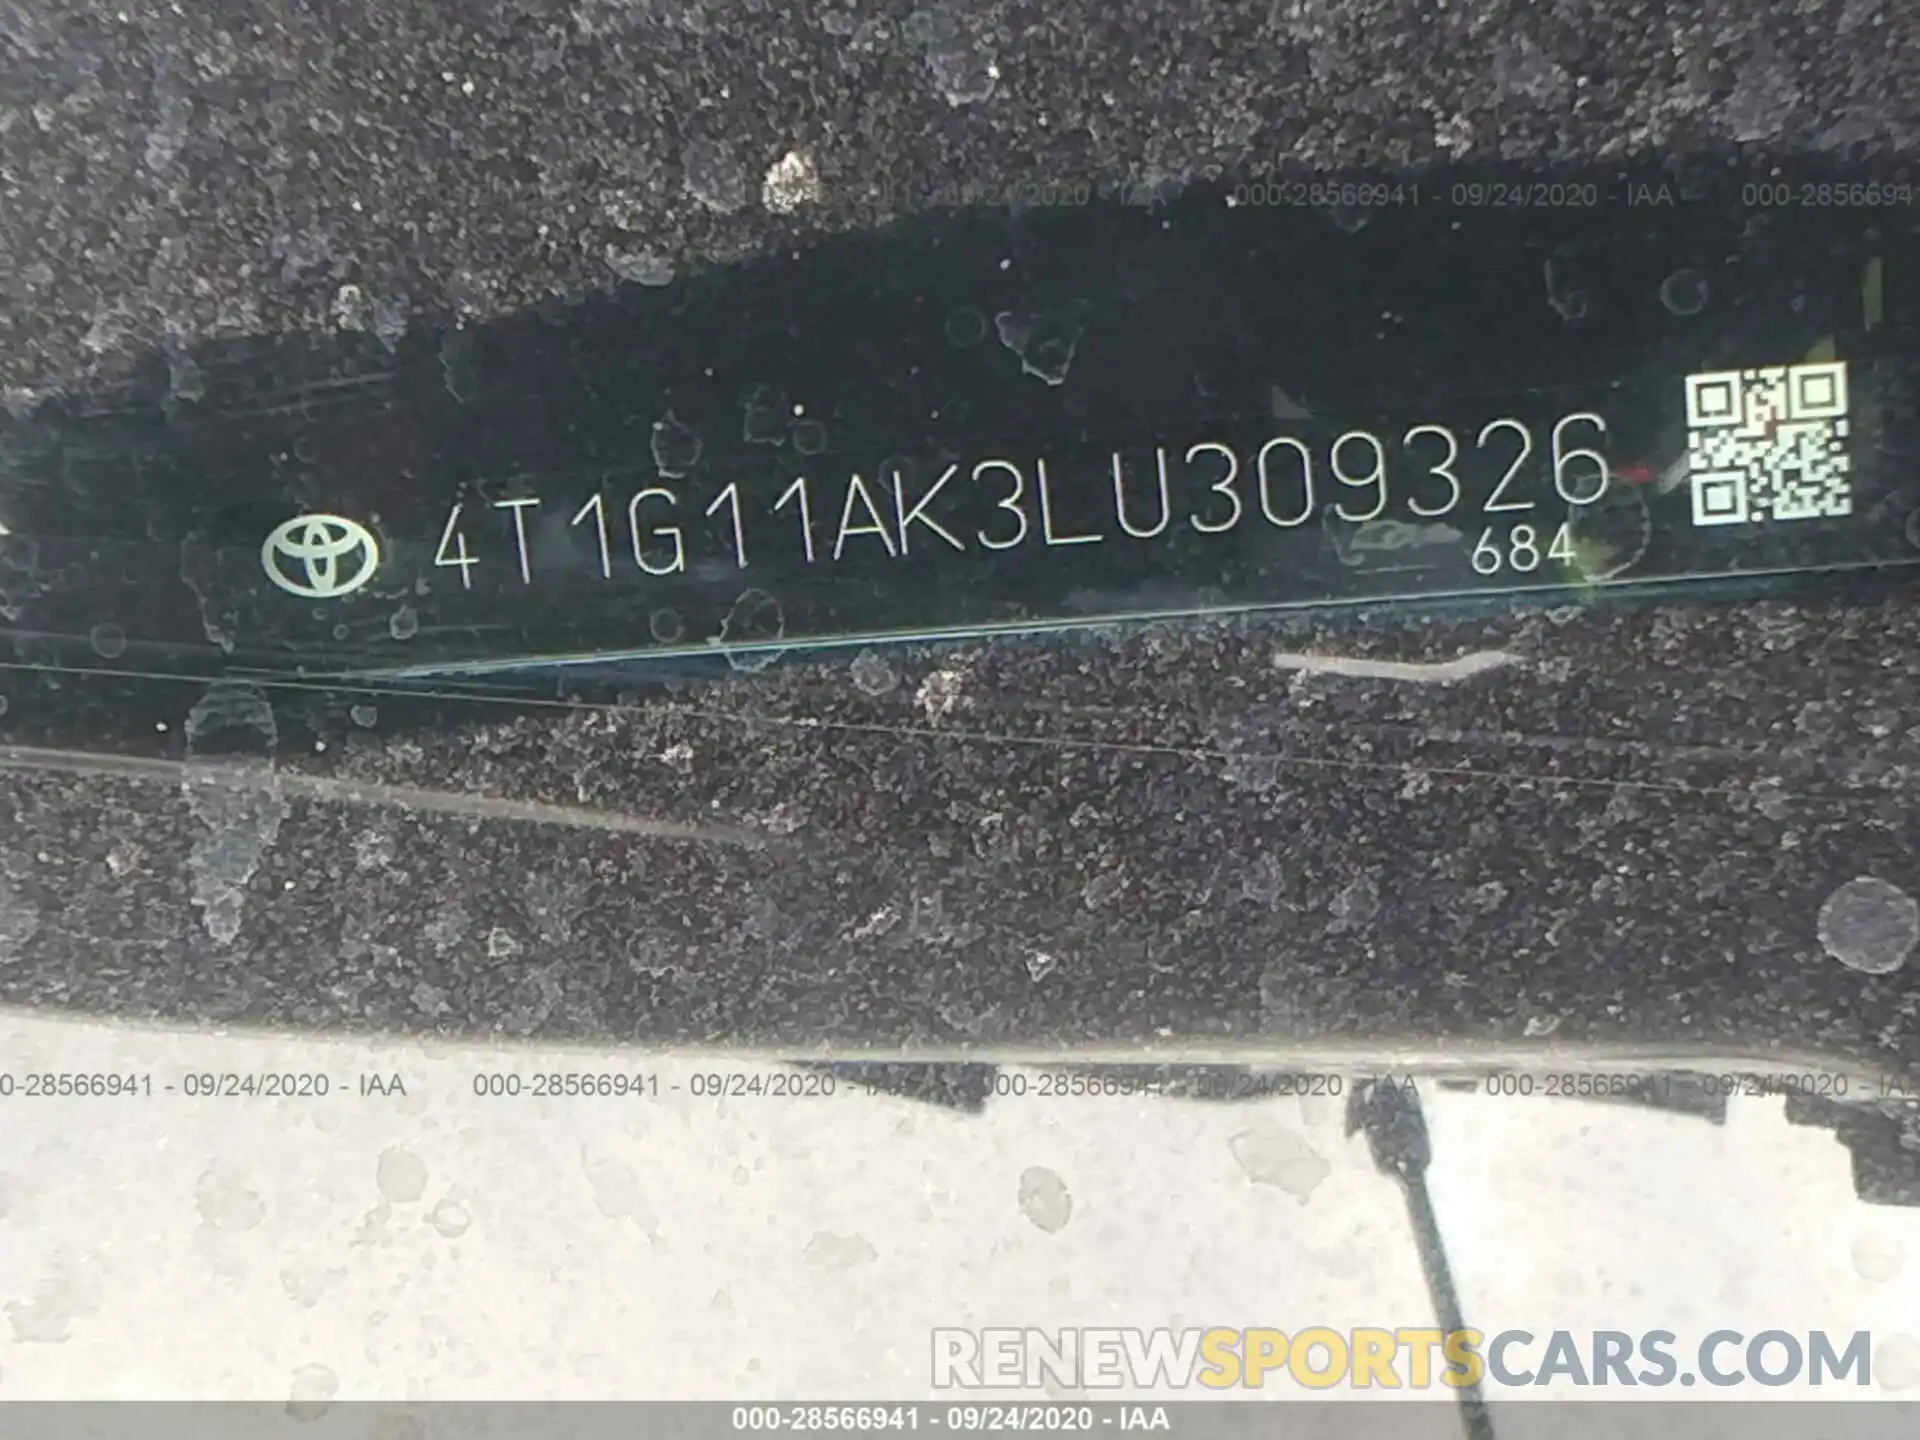 9 Photograph of a damaged car 4T1G11AK3LU309326 TOYOTA CAMRY 2020